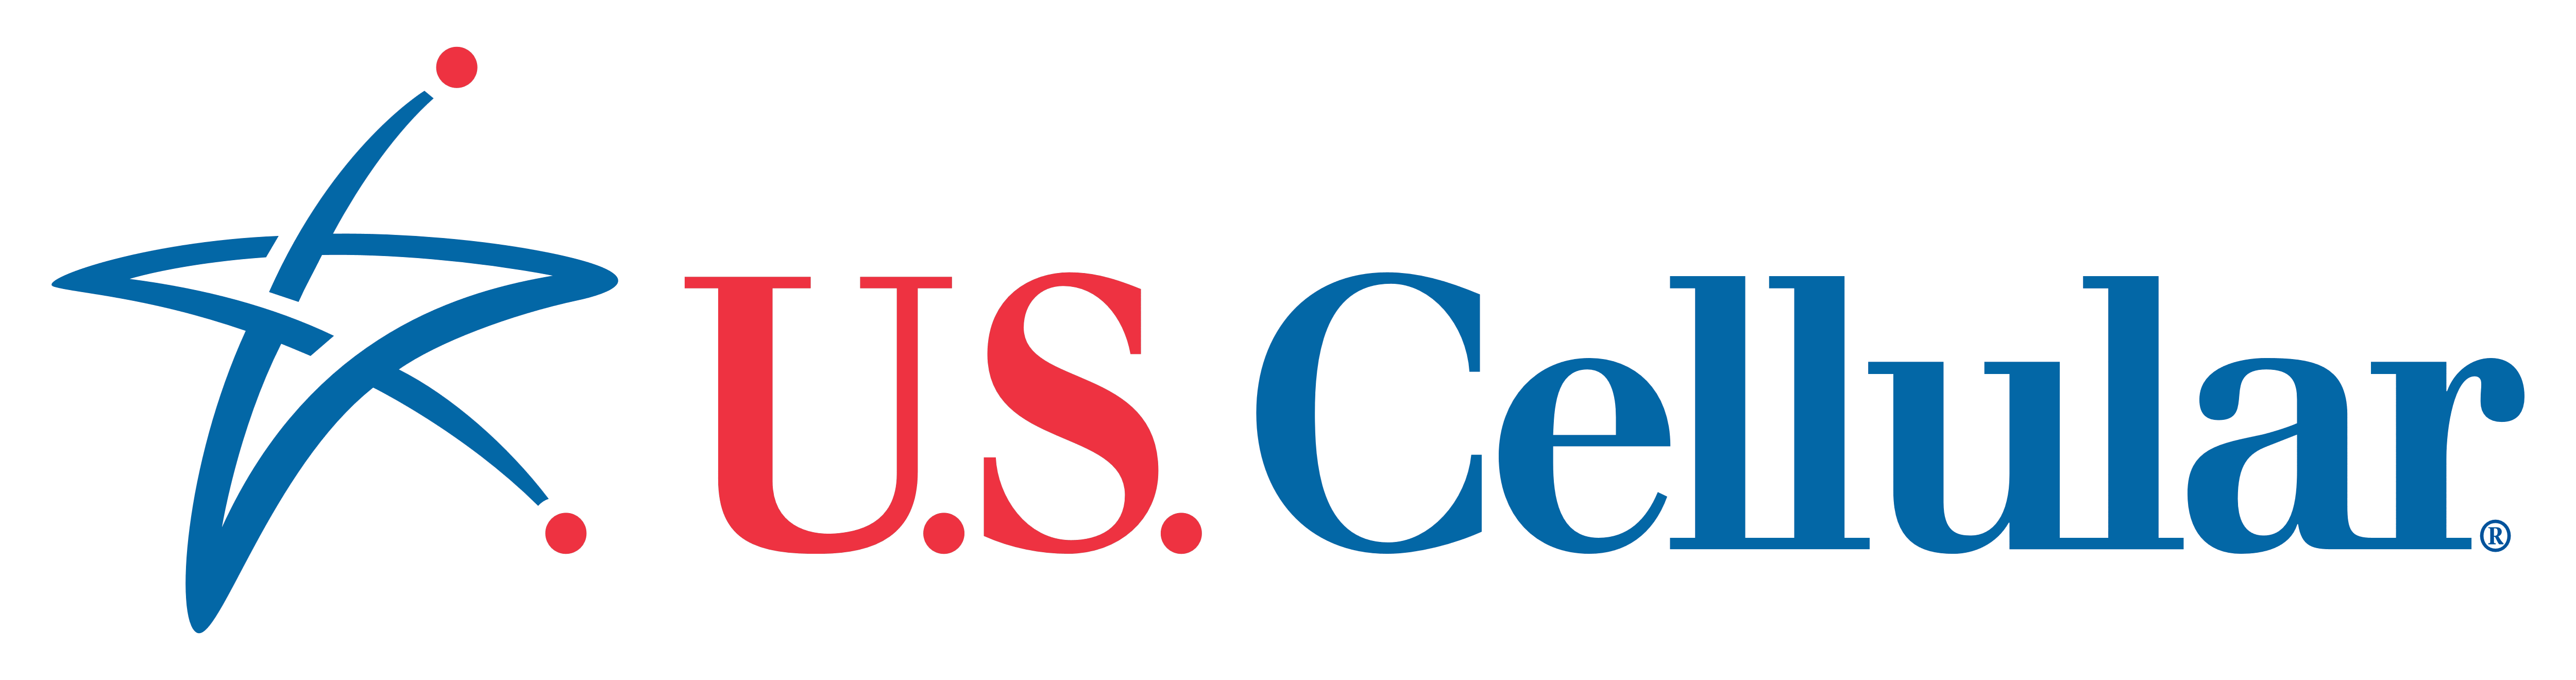 US_Cellular_logo_logotype